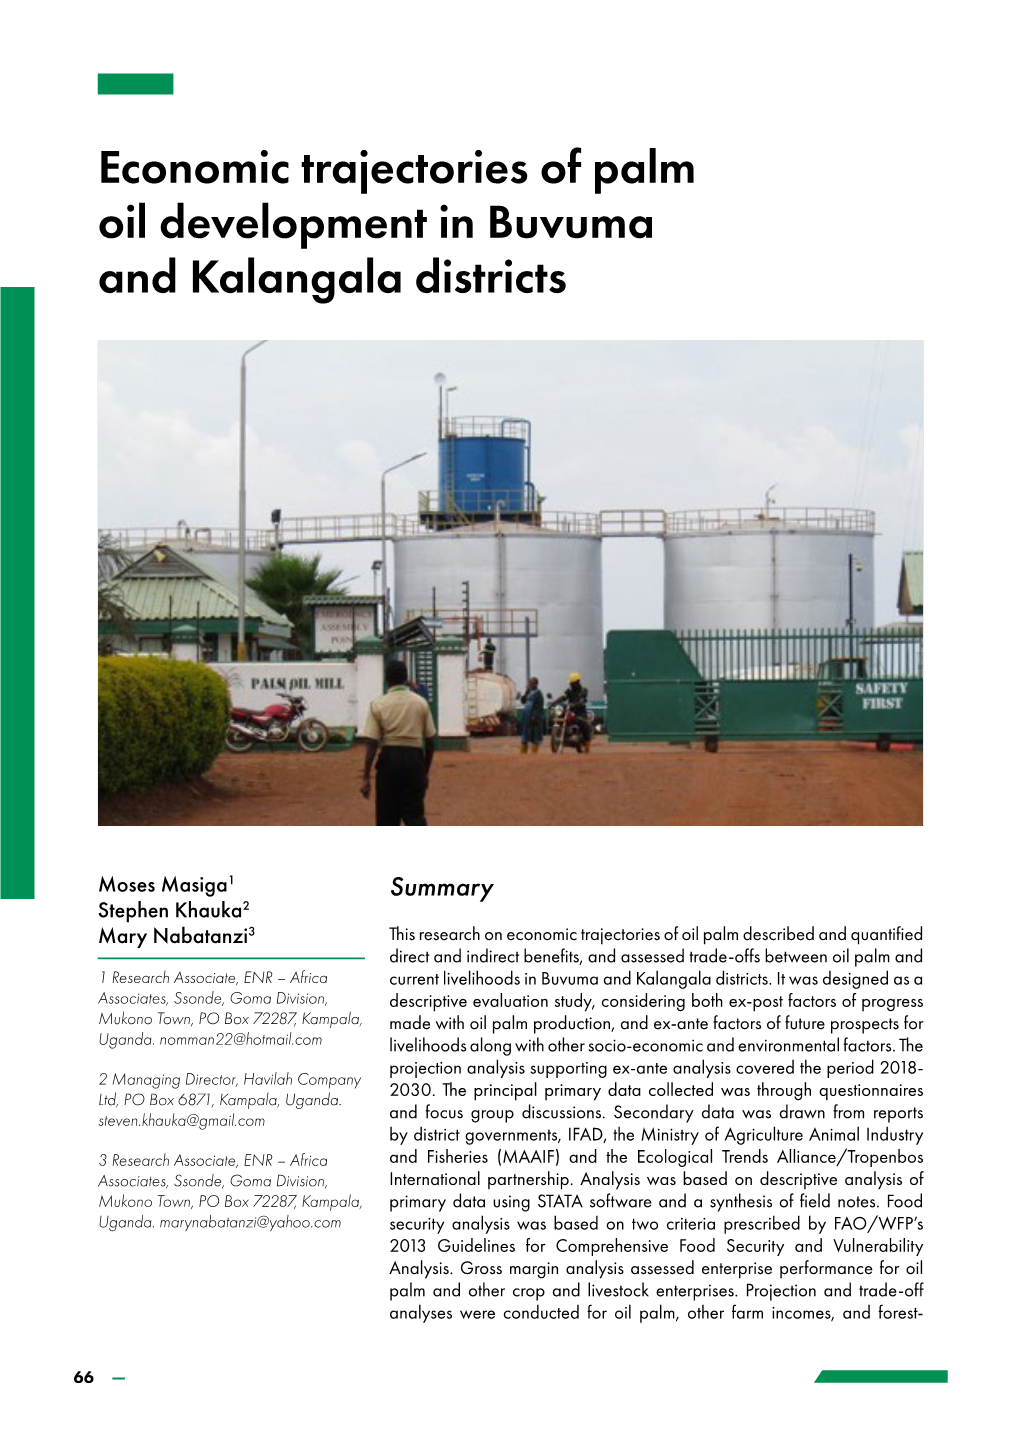 Economic Trajectories of Palm Oil Development in Buvuma and Kalangala Districts